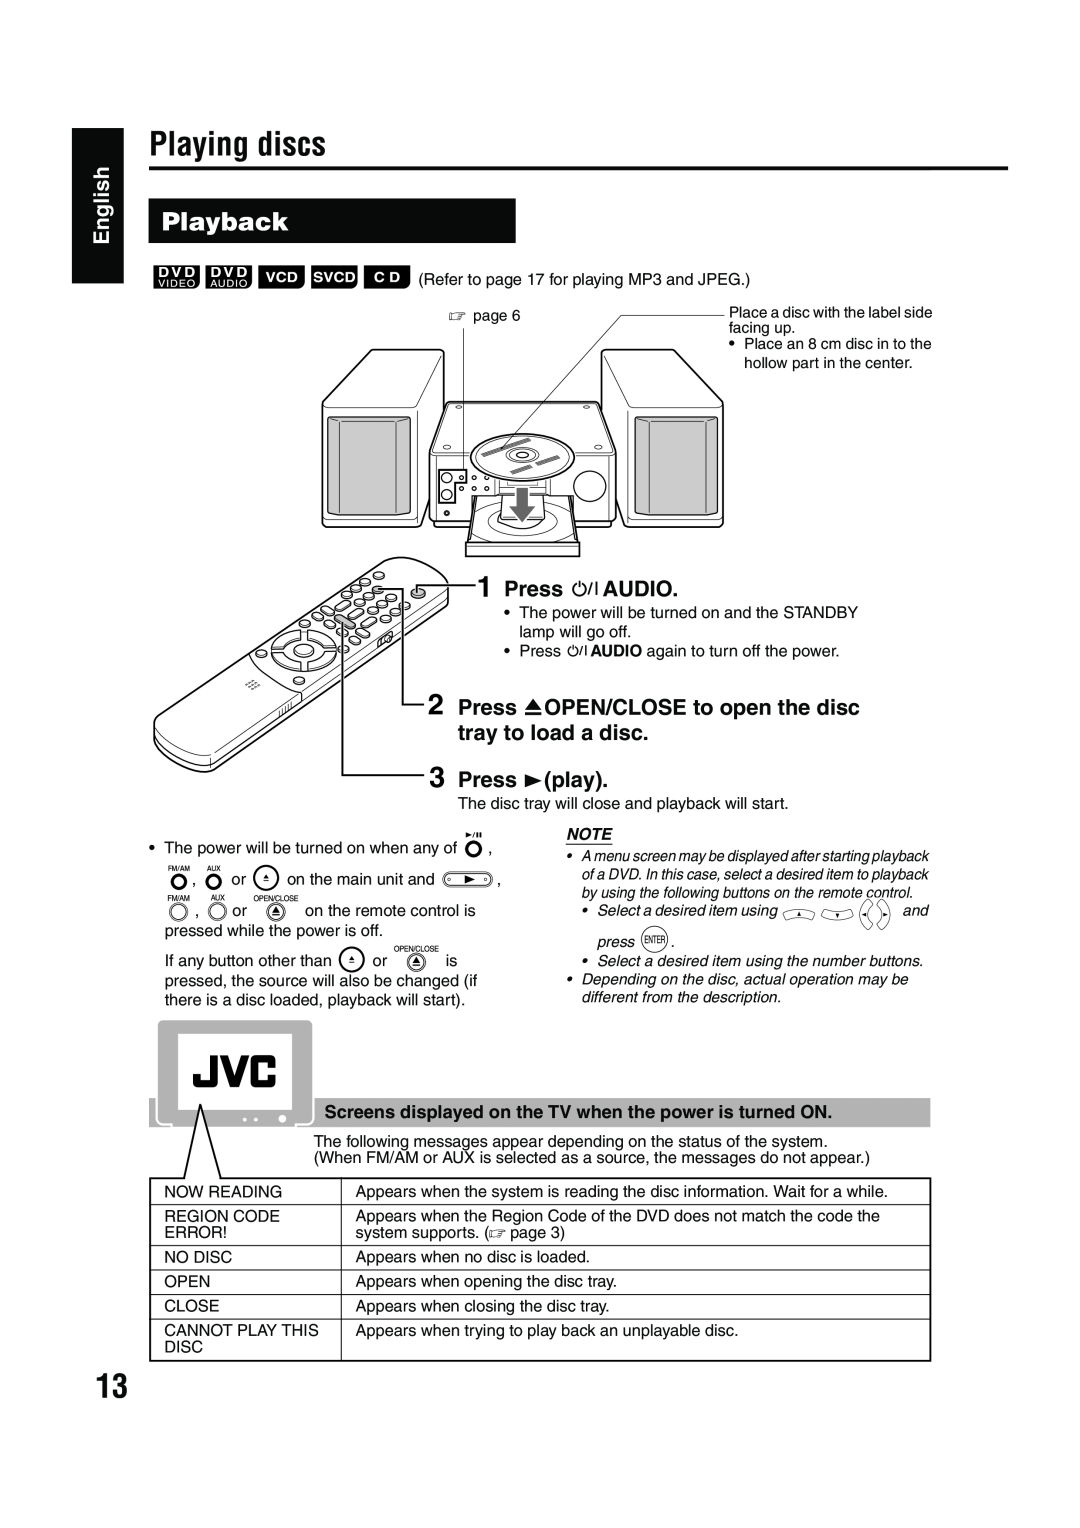 JVC EX-A1 manual Playing discs, Playback, Press FAUDIO, Press 3play, English 